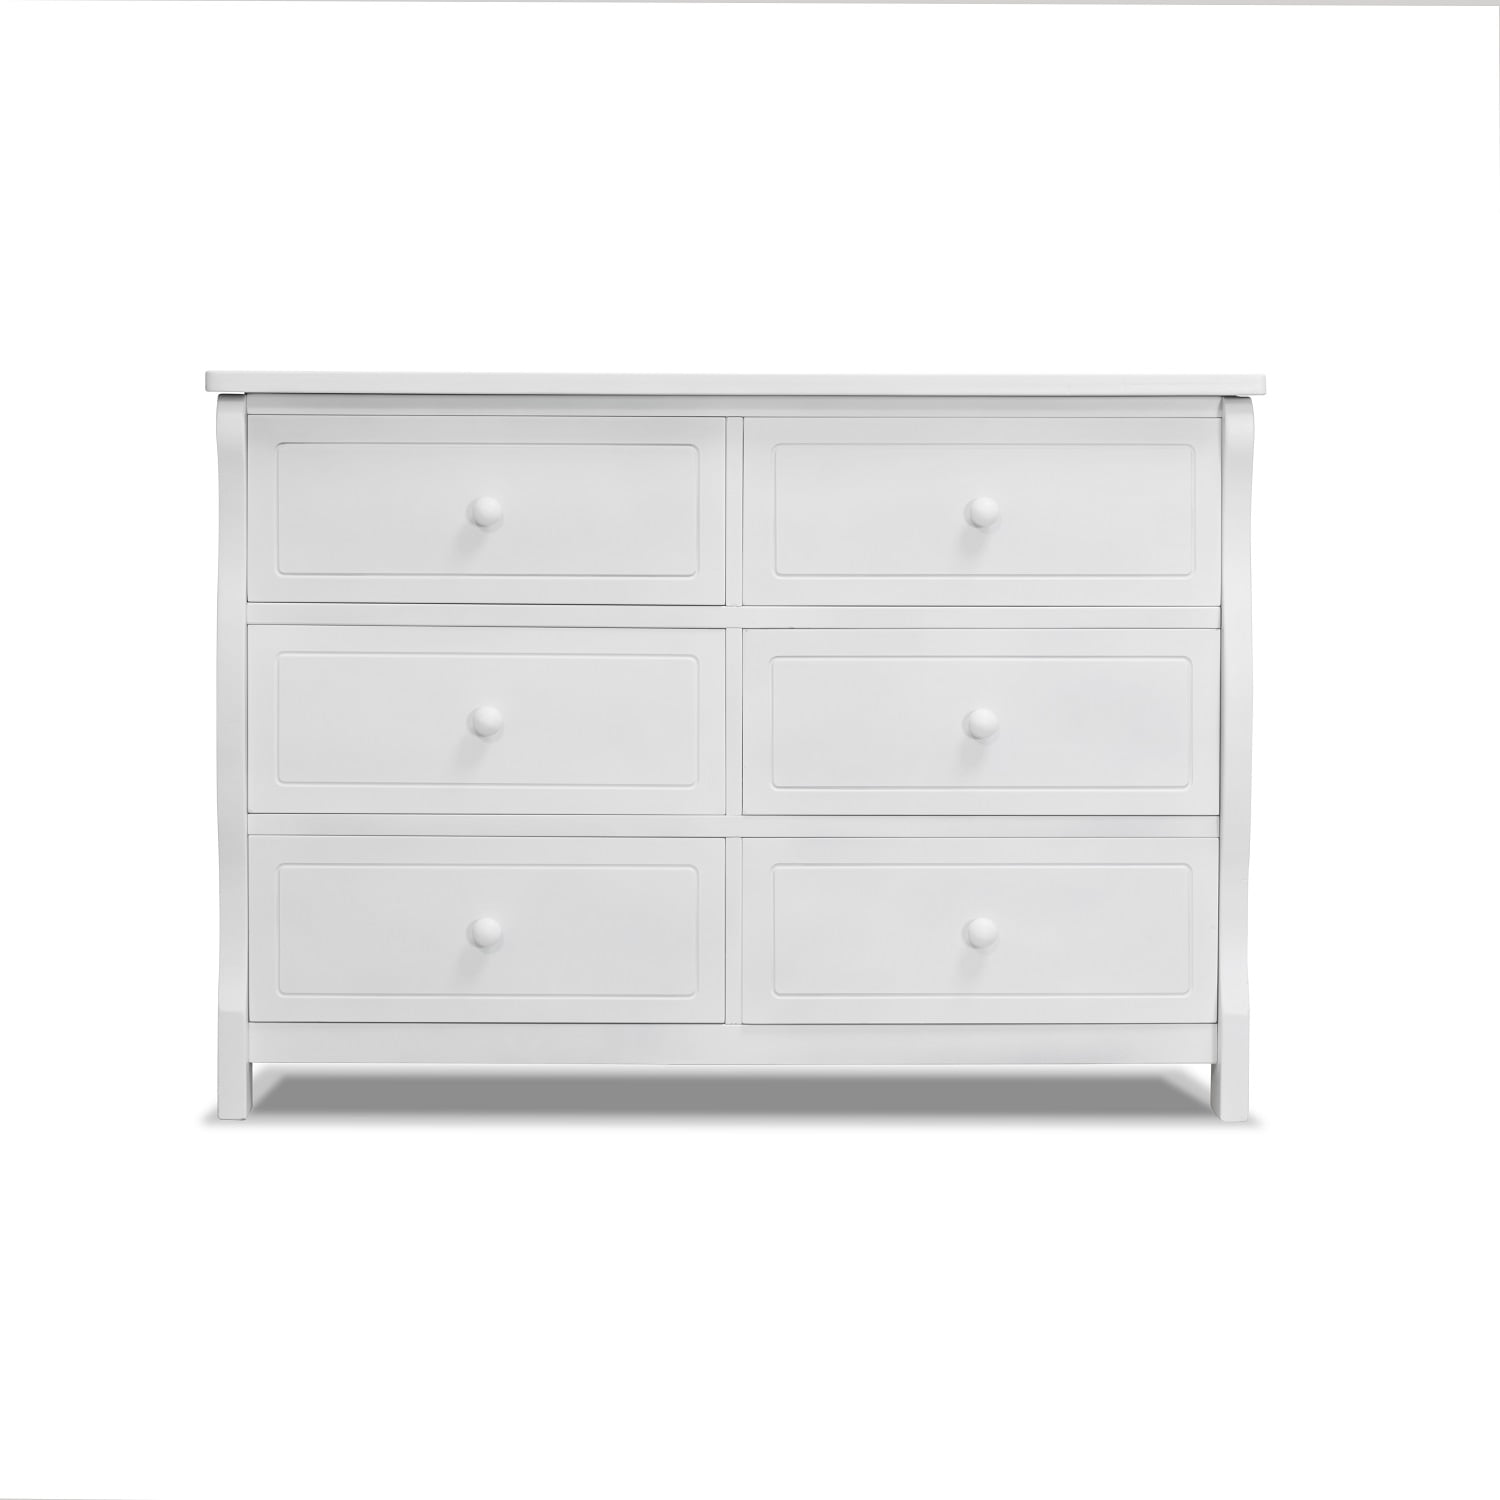 Sorelle Princeton Elite Double Dresser, Sorelle Berkley Dresser White